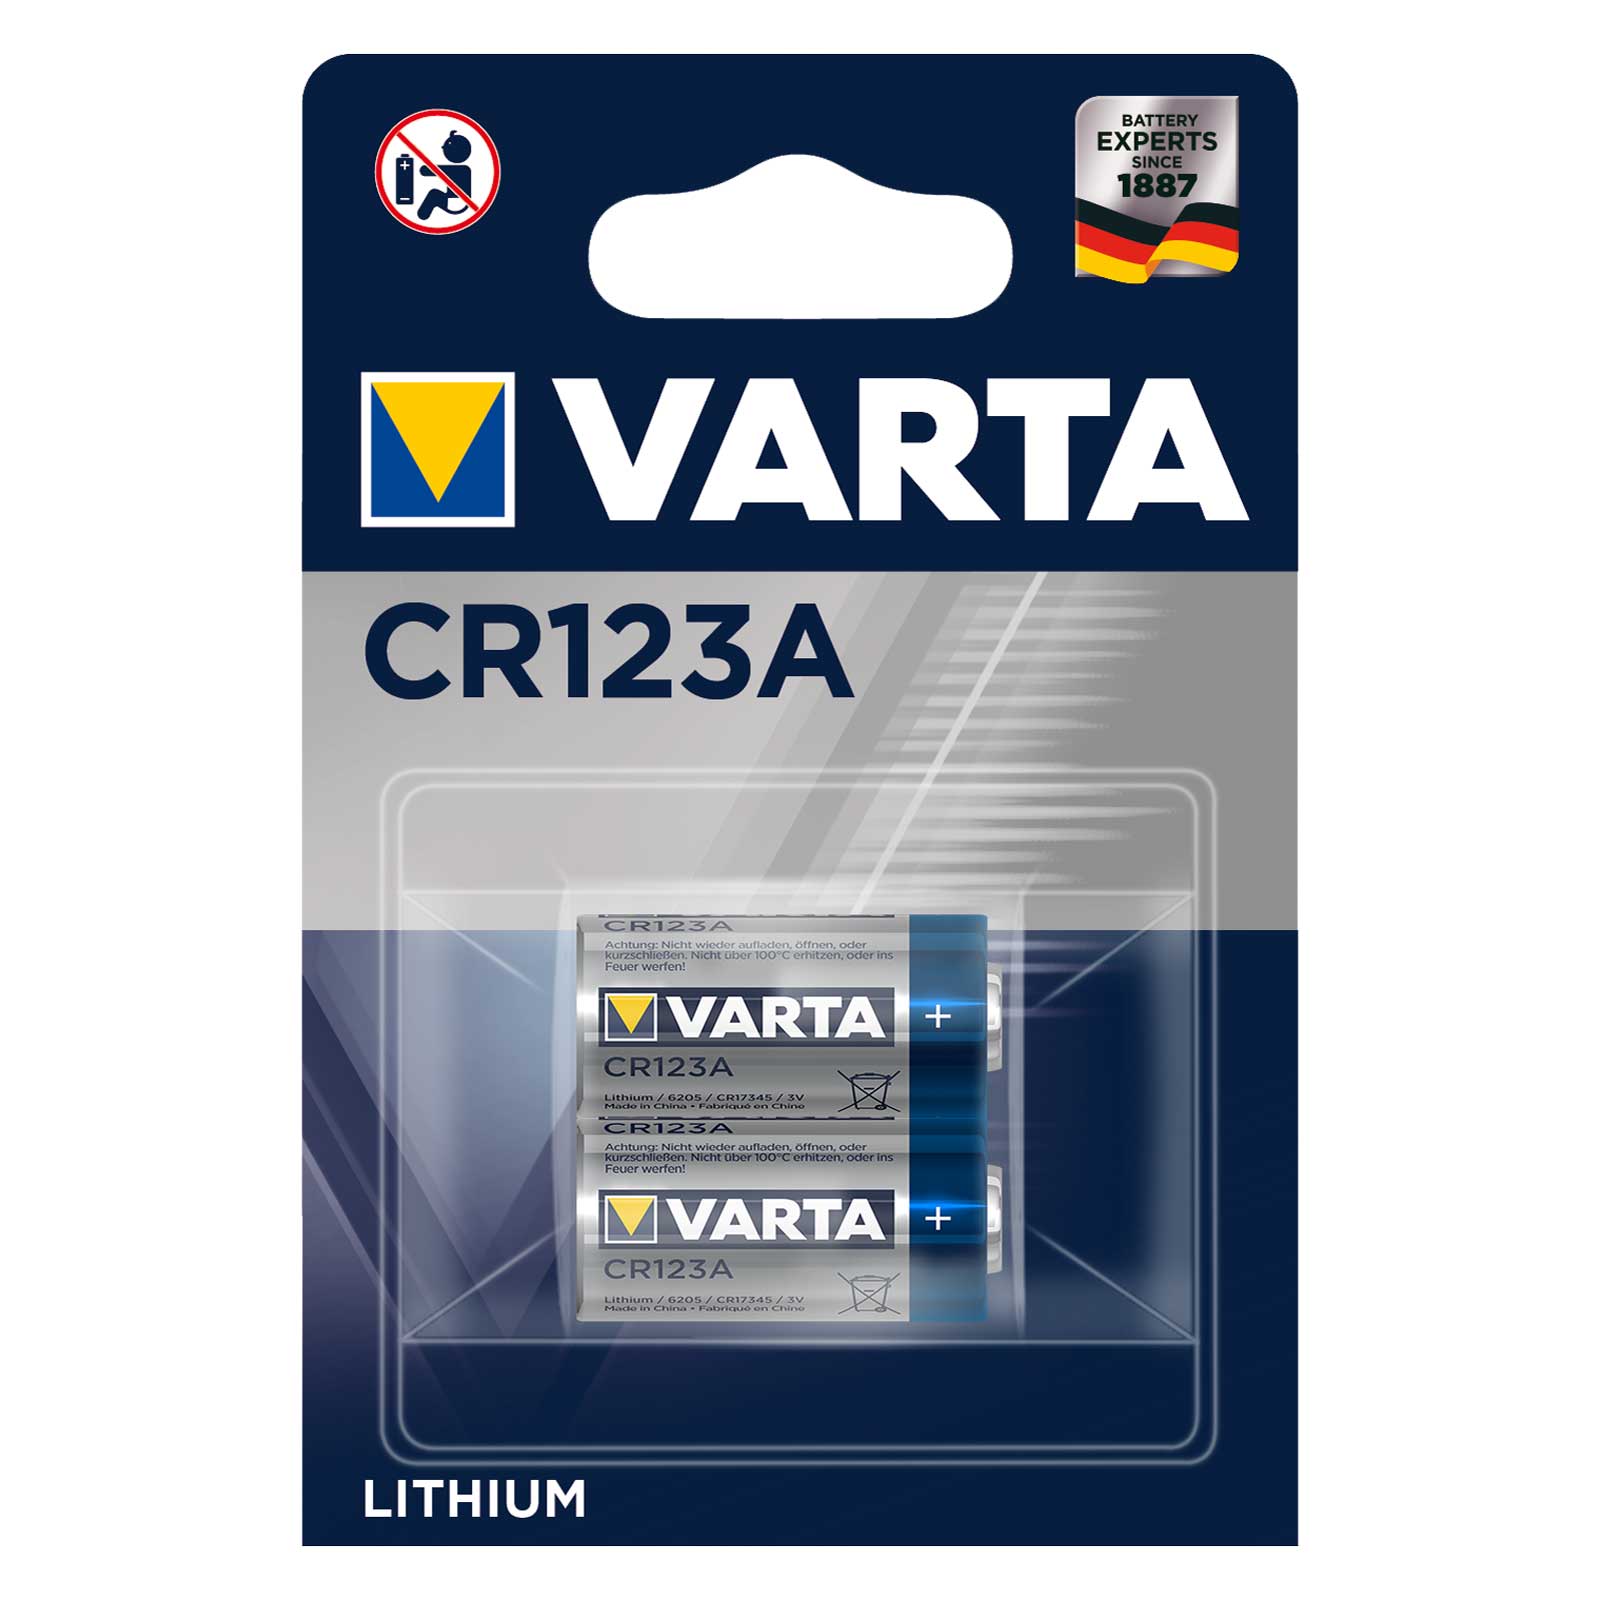 8 x Varta Professional Lithium Foto Photo Batterie CR123 A 3V im 2er Blister